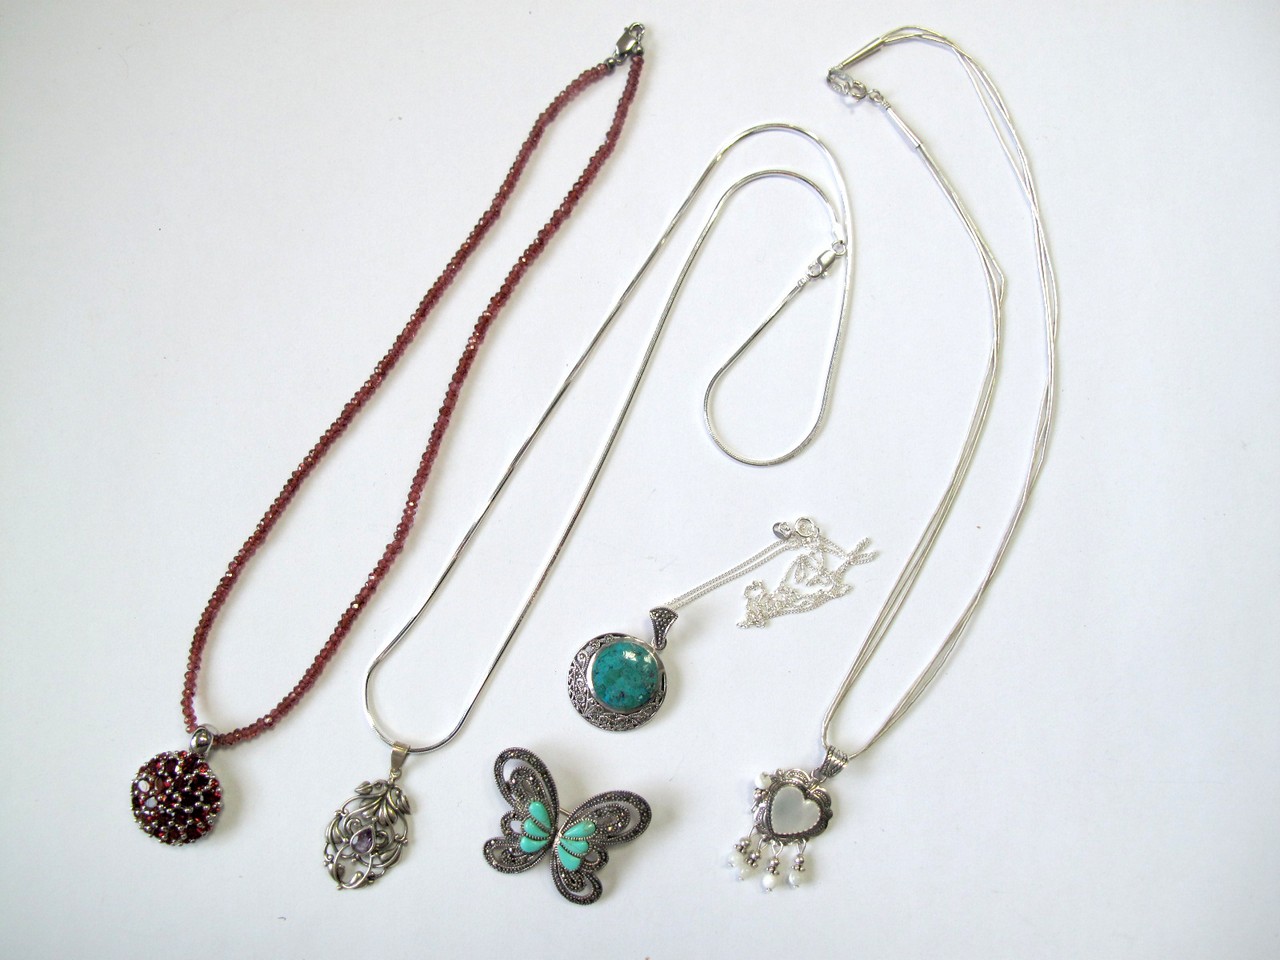 Jewellery - A Garnet Bead Necklace, suspending garnet cluster pendant, stamped "925", together